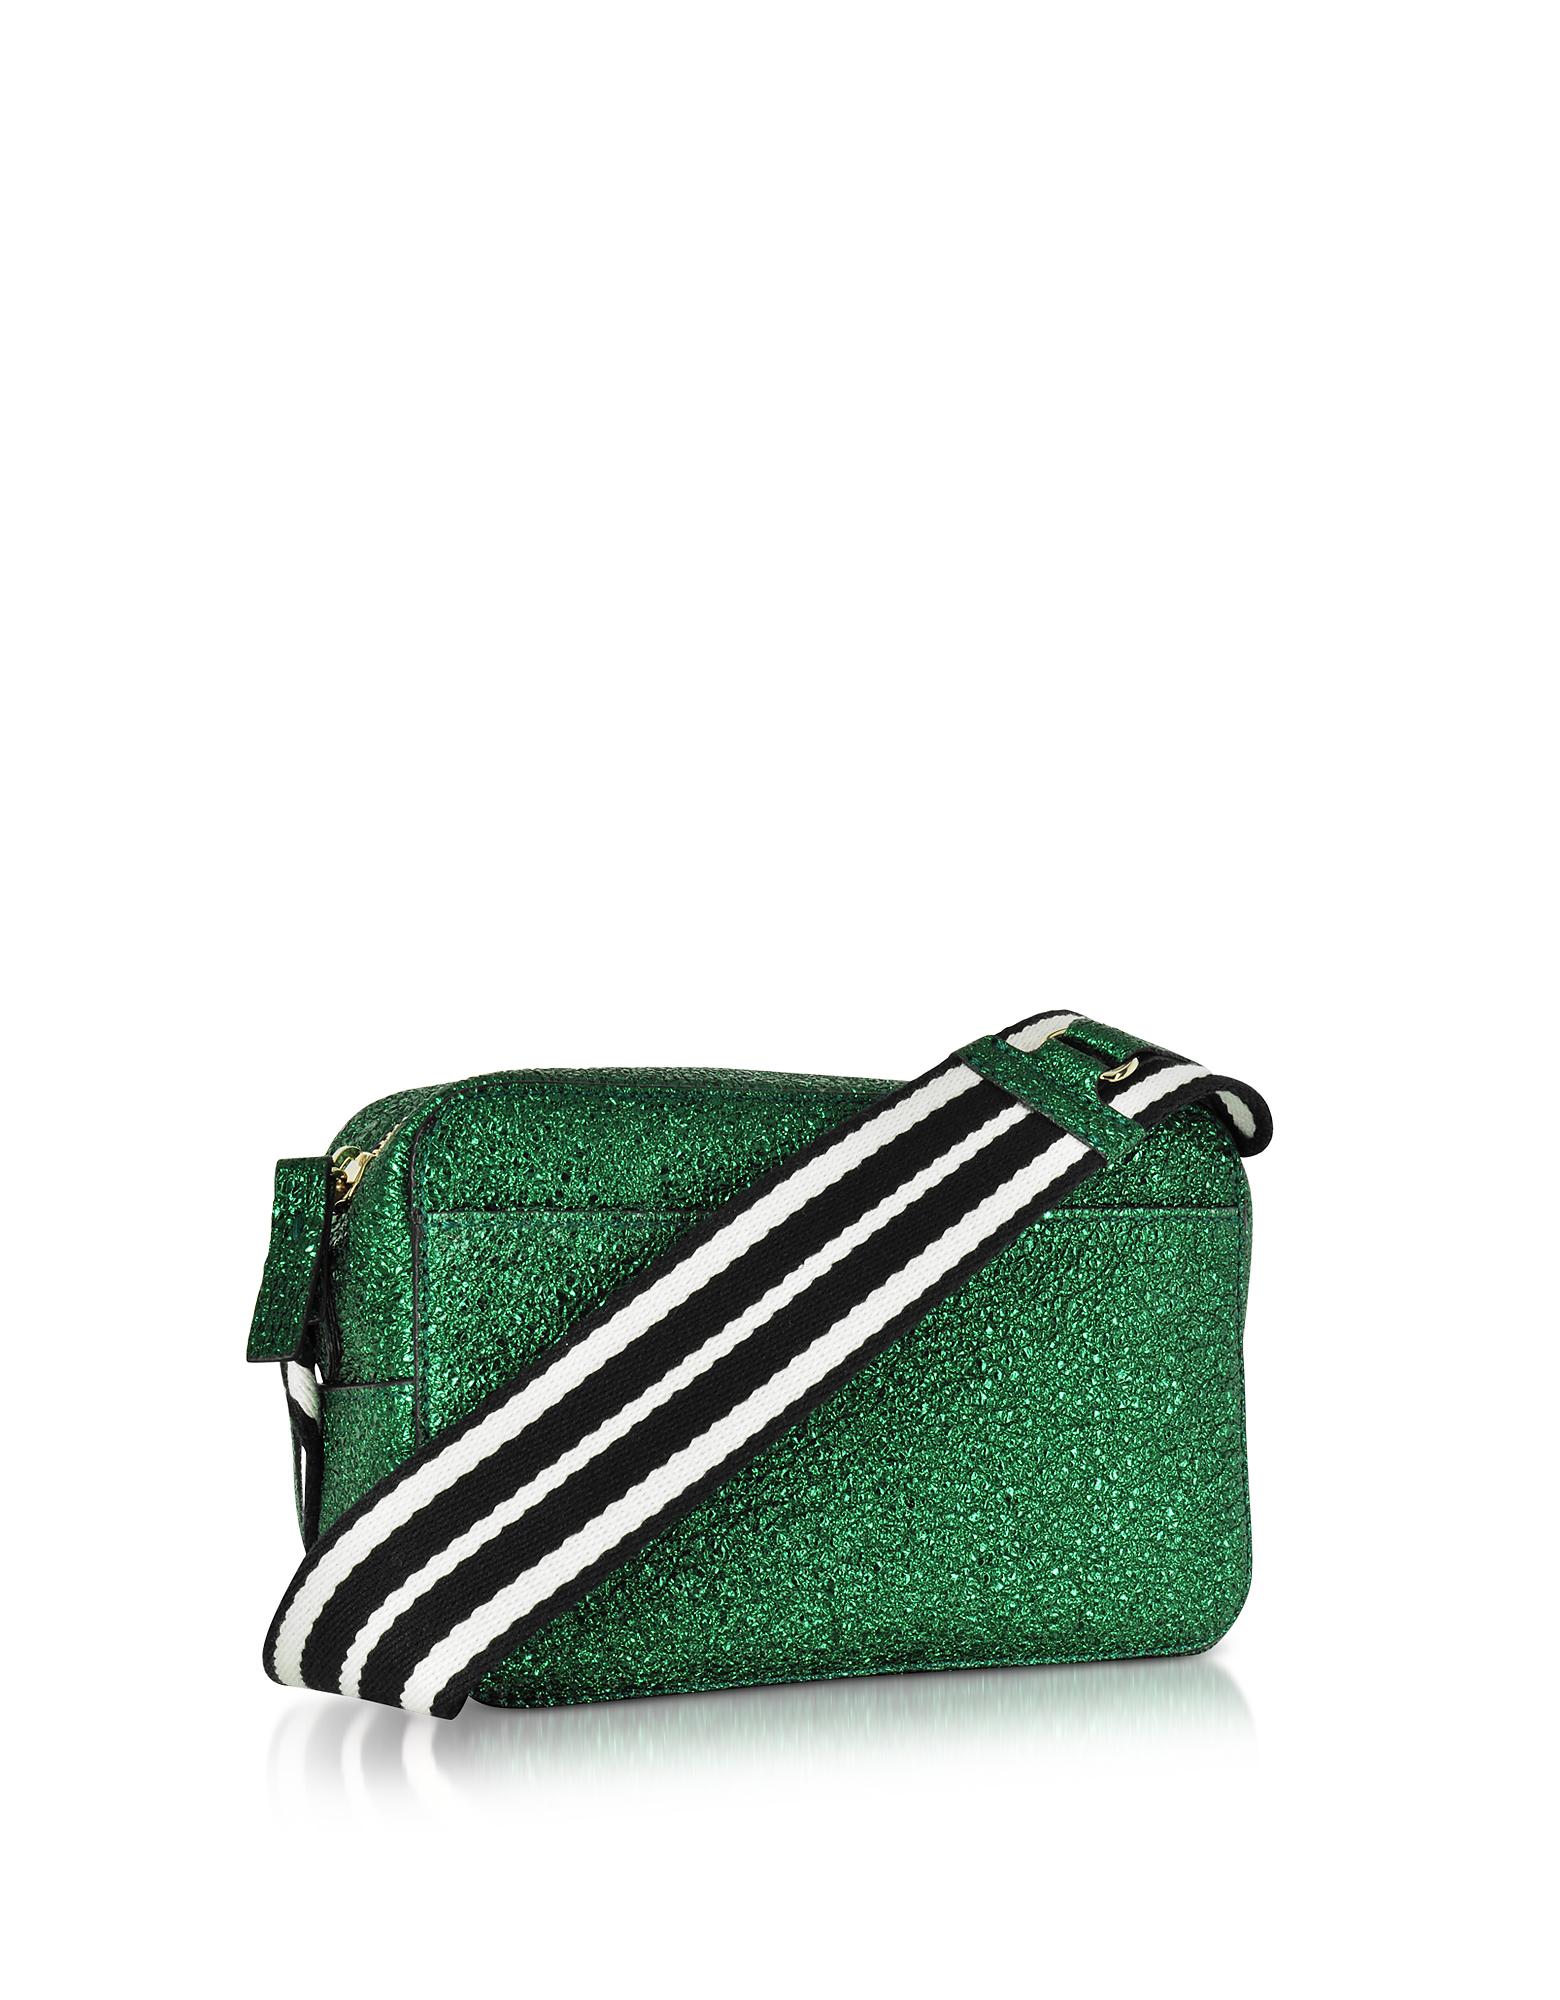 RED Valentino Dark Green Crackled Metallic Leather Crossbody Bag W/striped Canvas Strap - Lyst